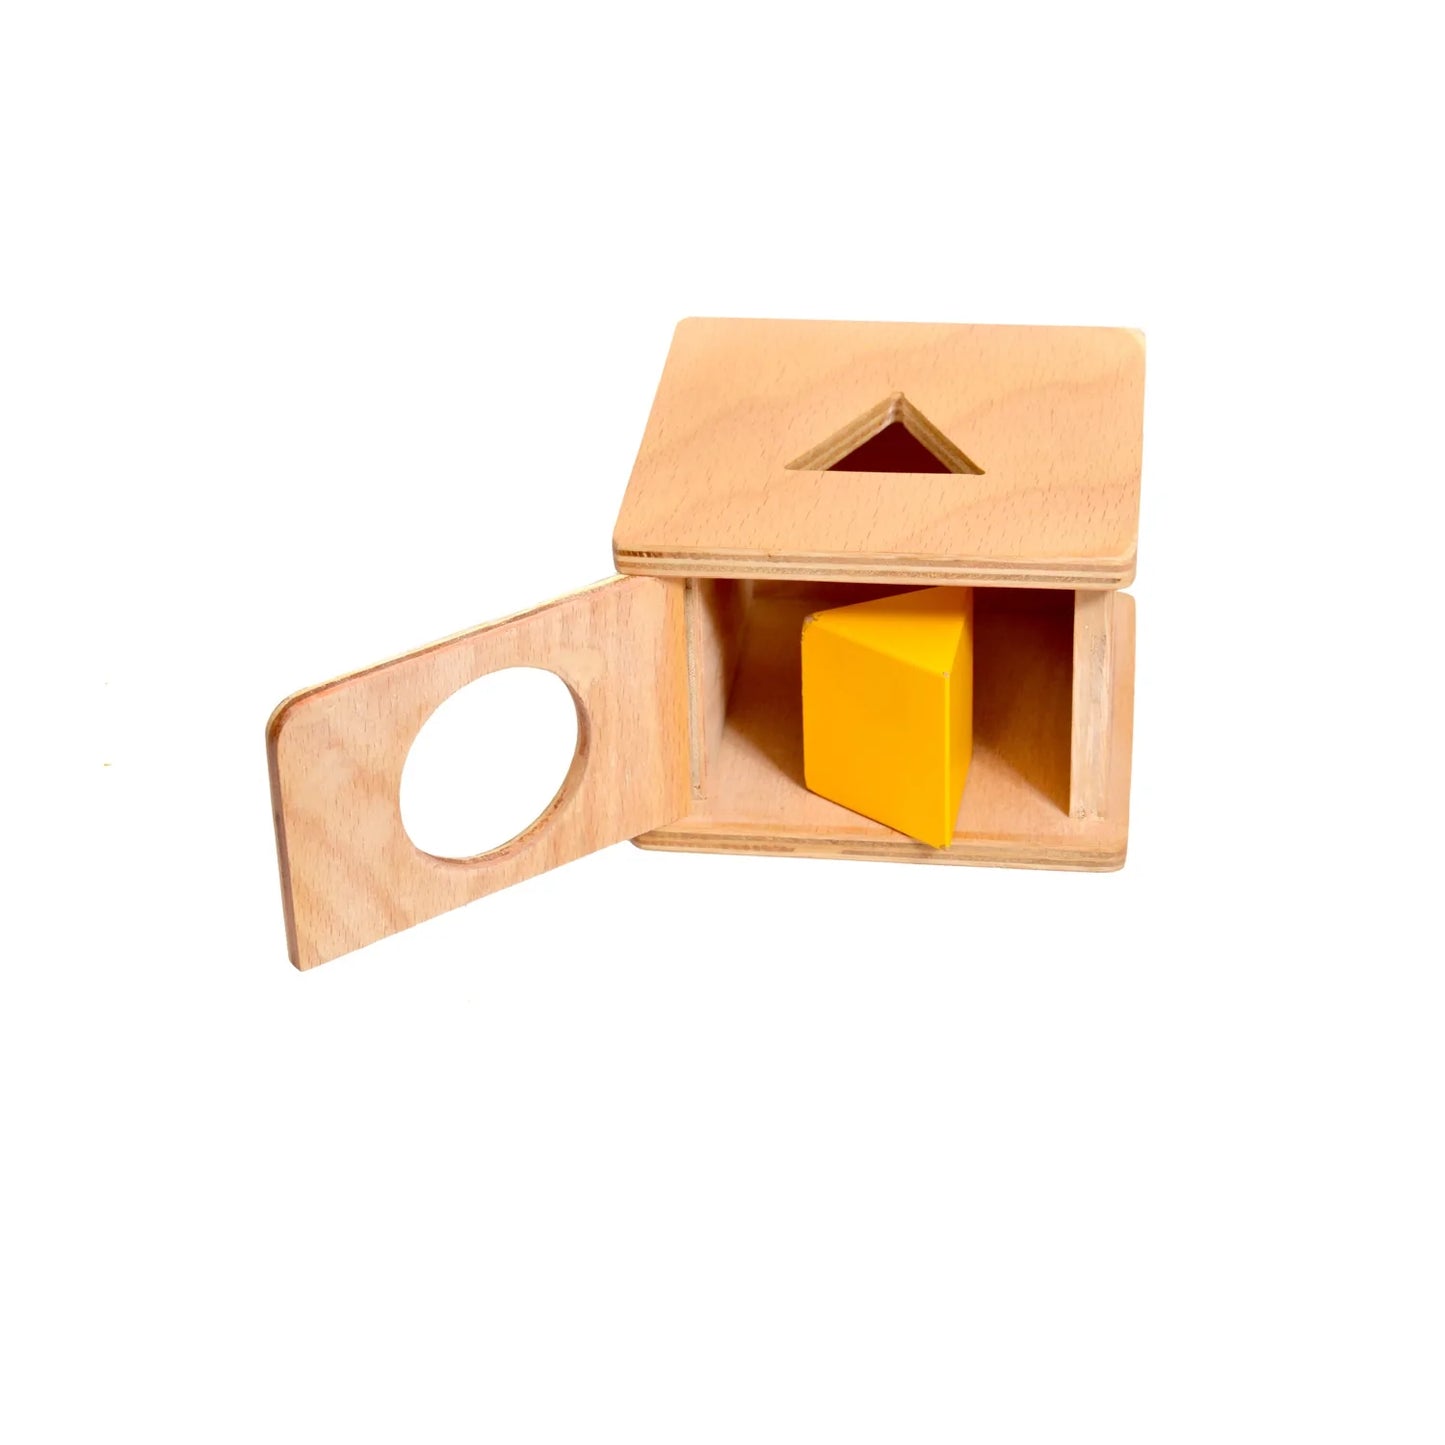 Montessori Imbucare Box Triangle Hole Wooden Toy